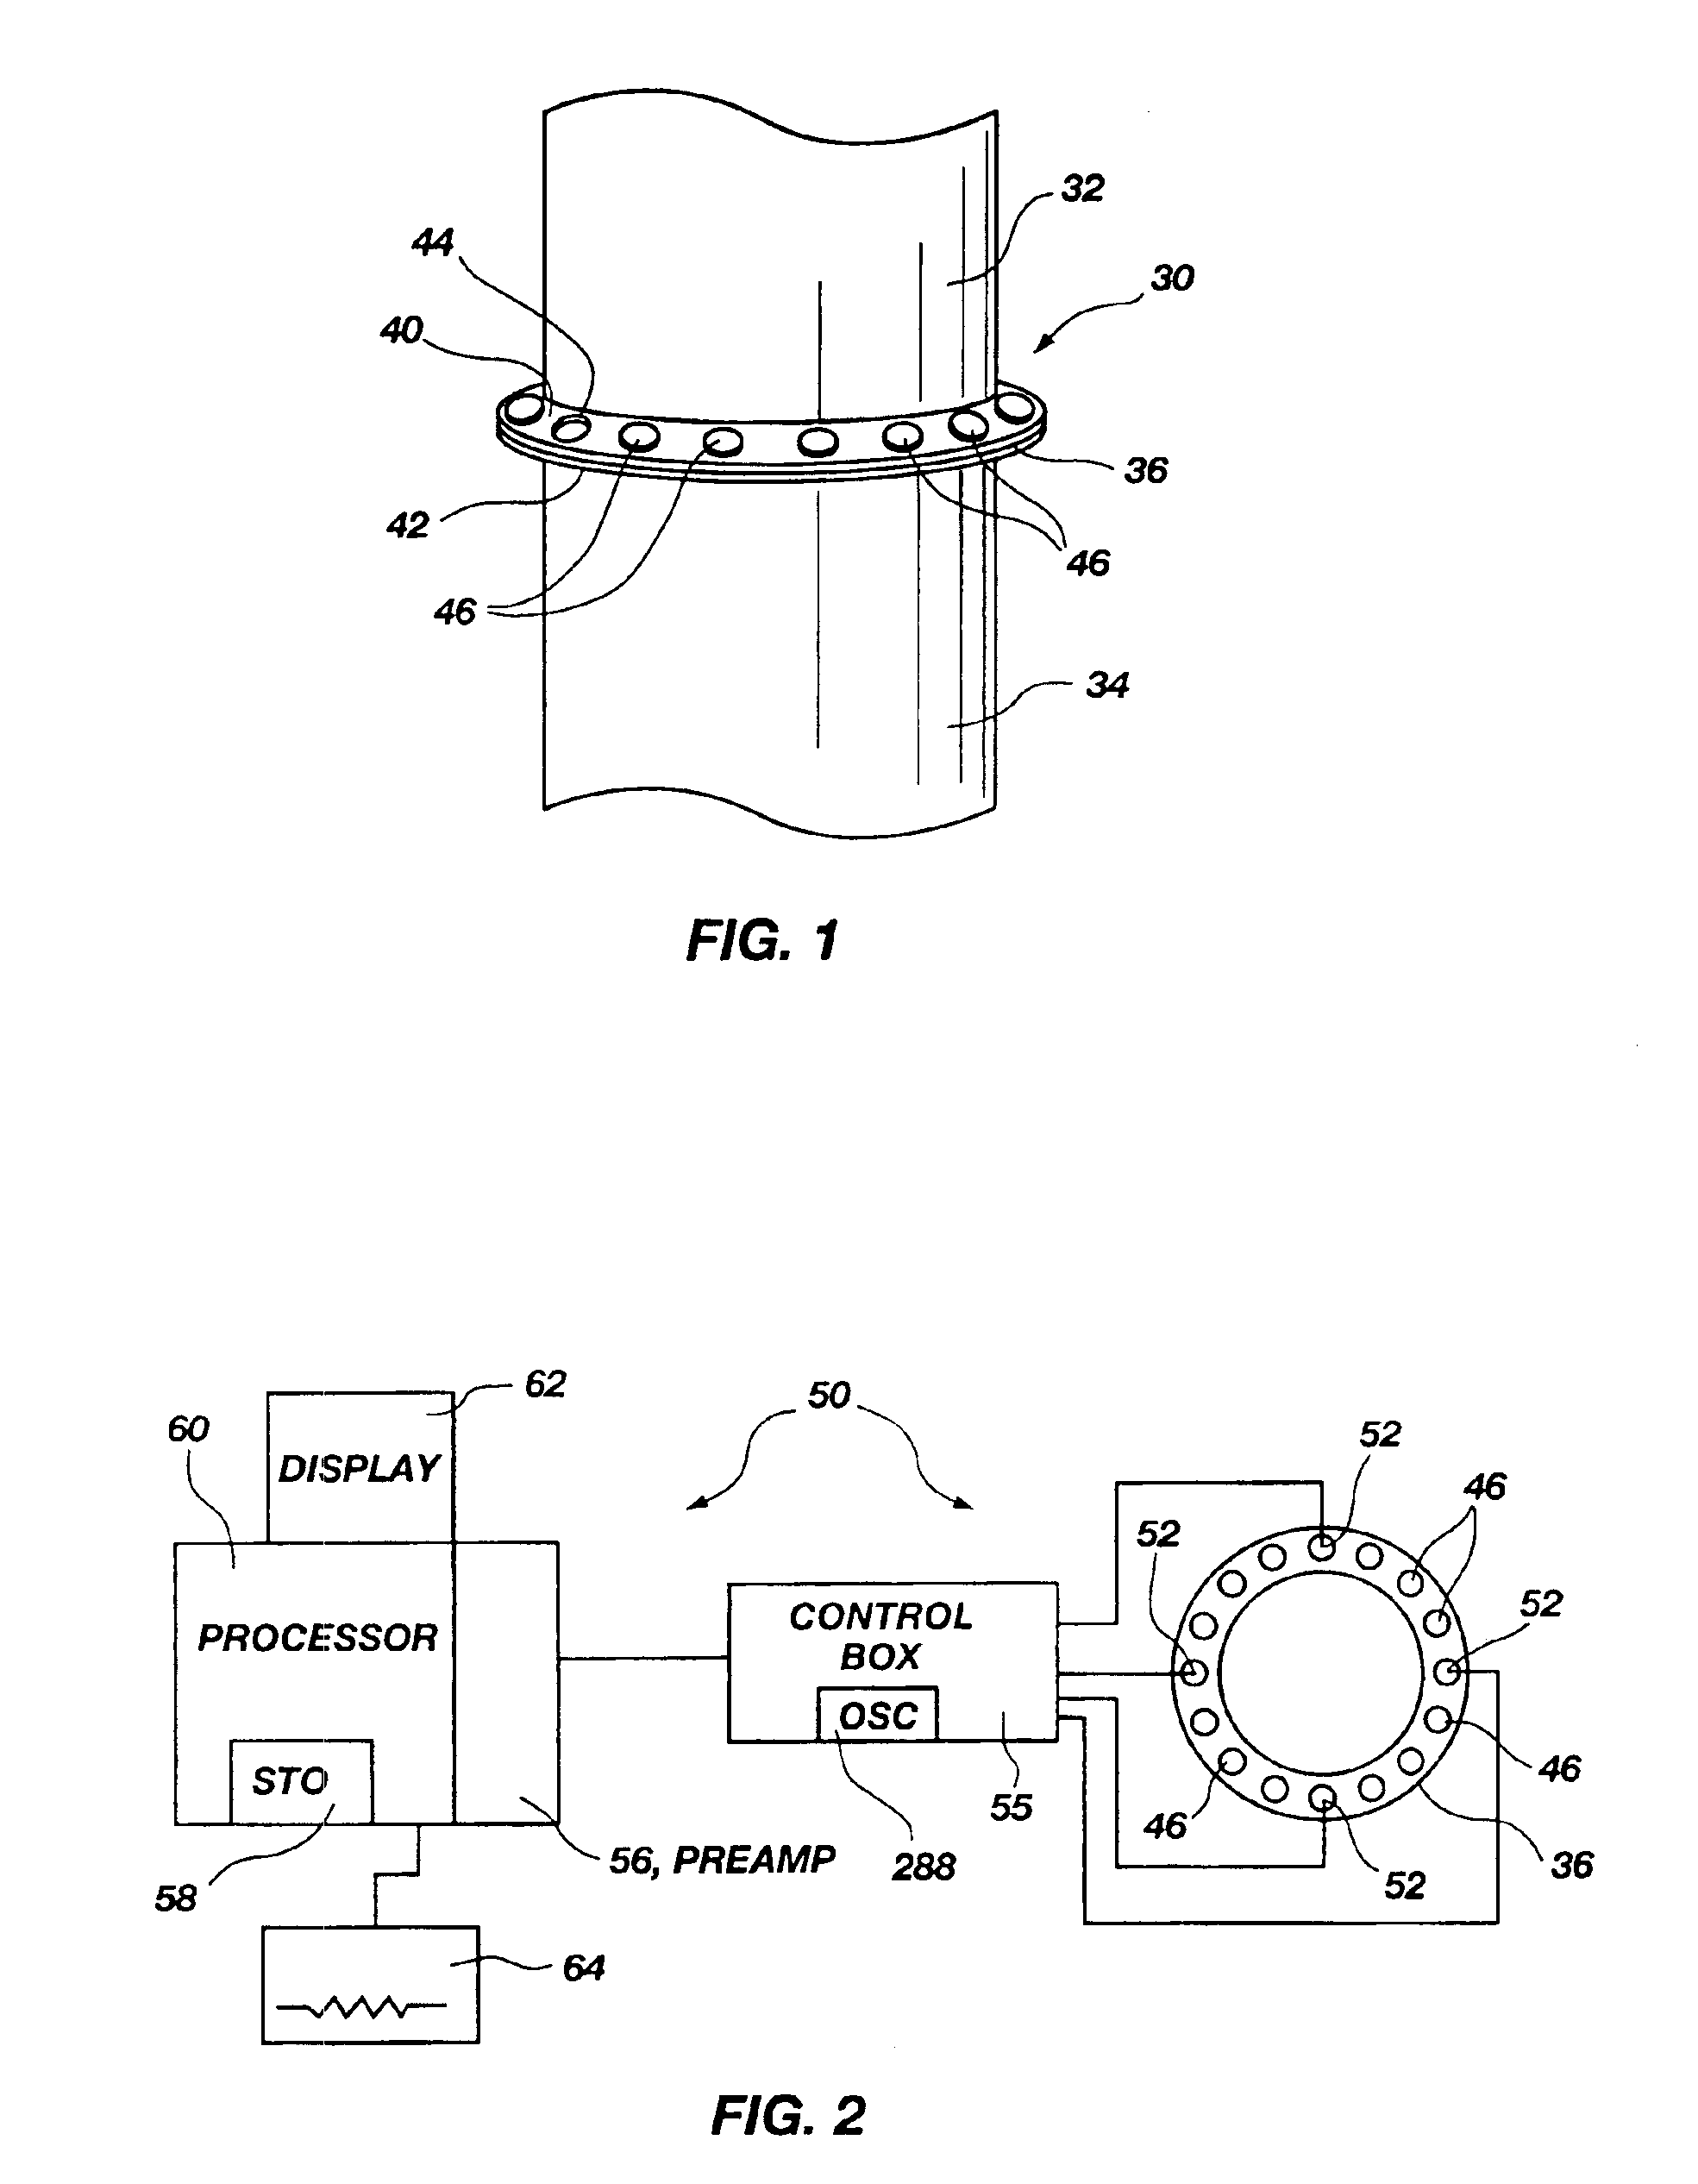 Method and apparatus for measuring bending in a pin member